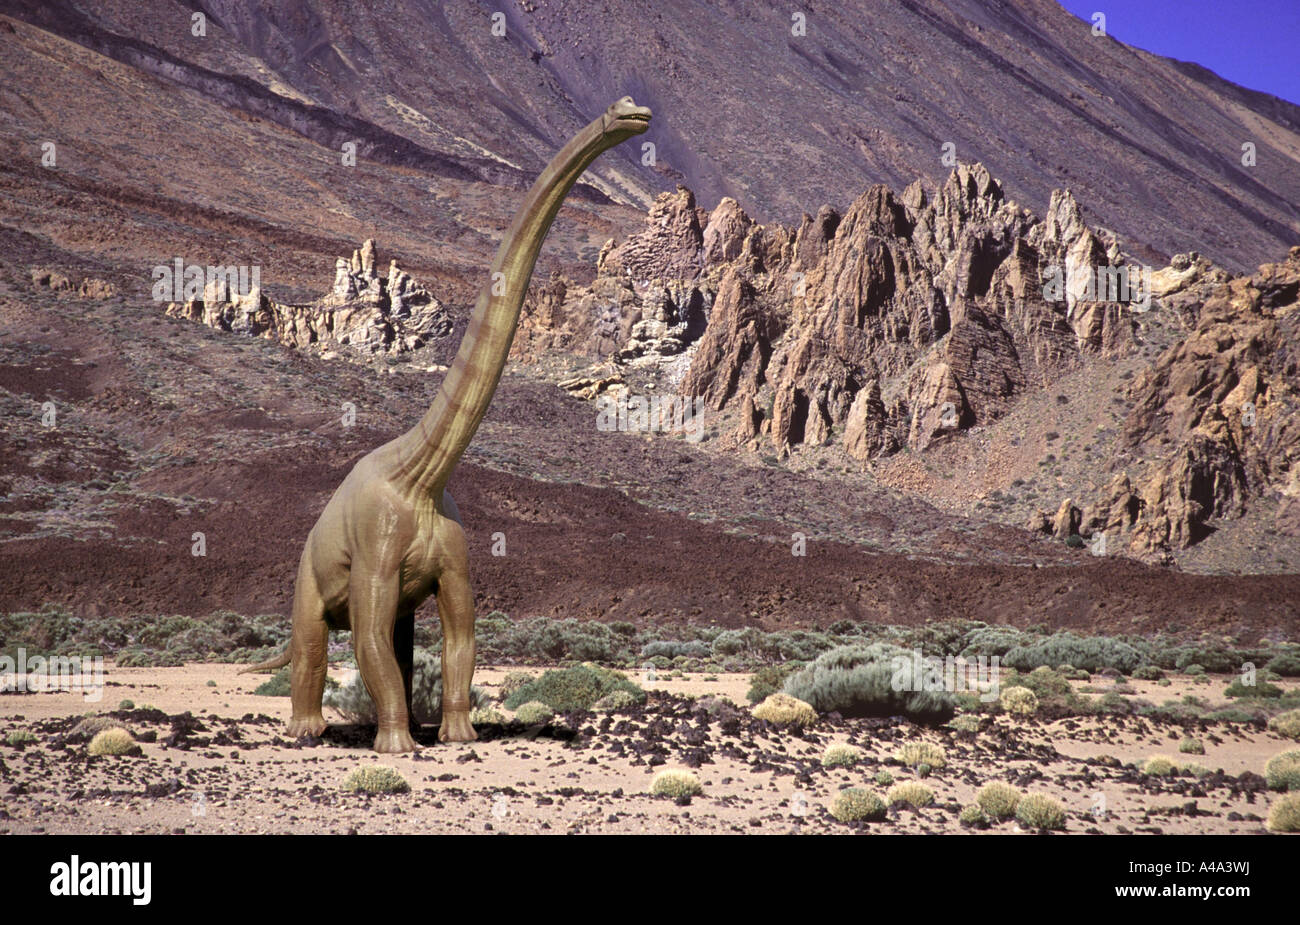 Brachiosaurus in volcanic landscape Stock Photo